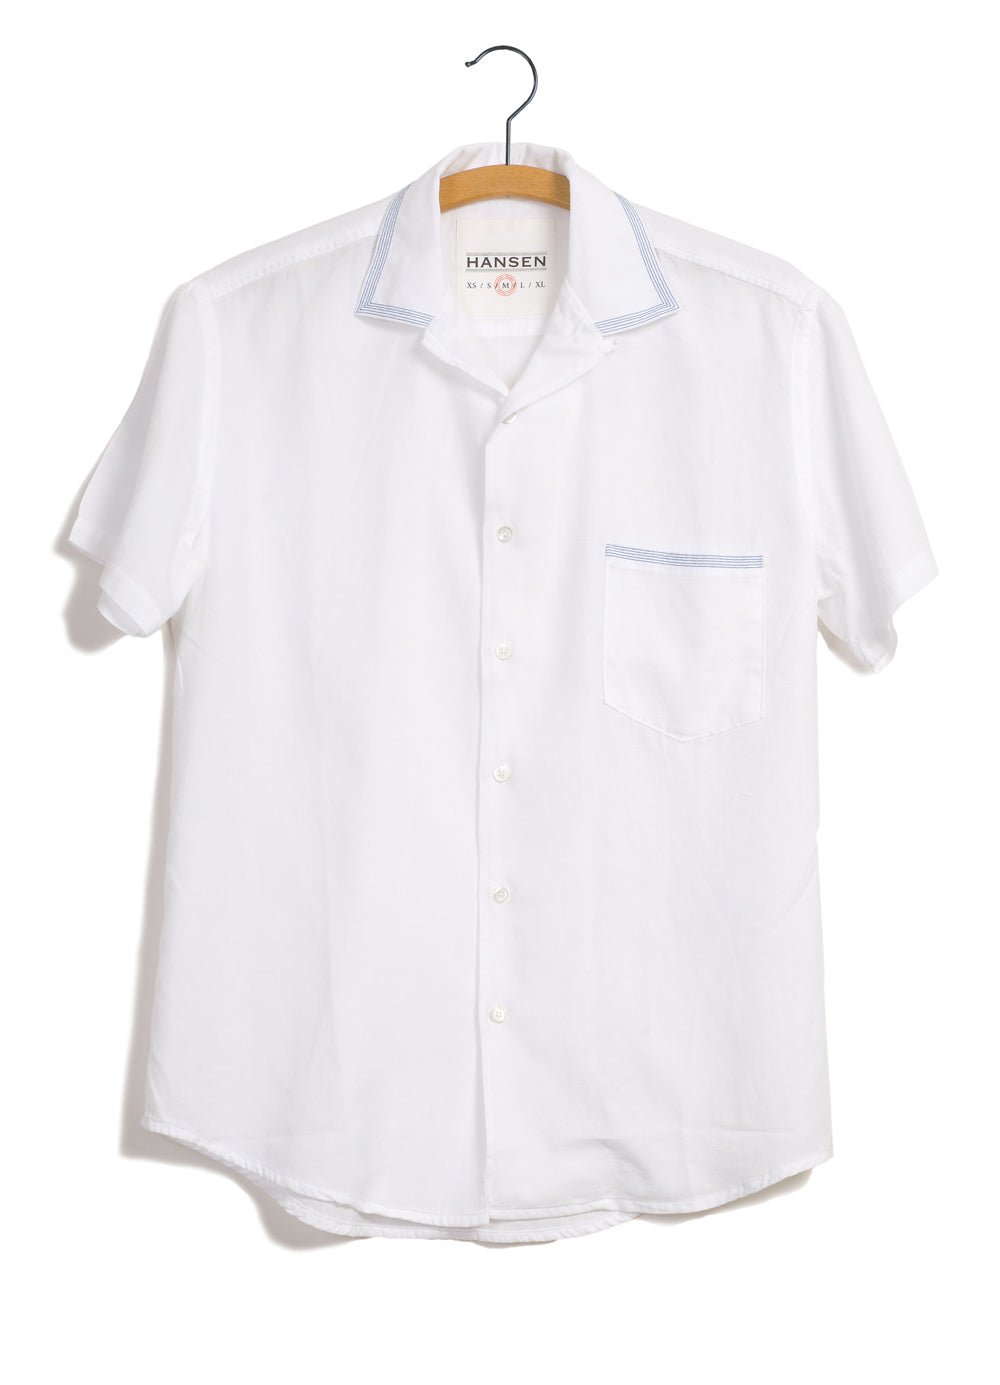 HANSEN GARMENTS - JONNY | Short Sleeve Shirt | White - HANSEN Garments